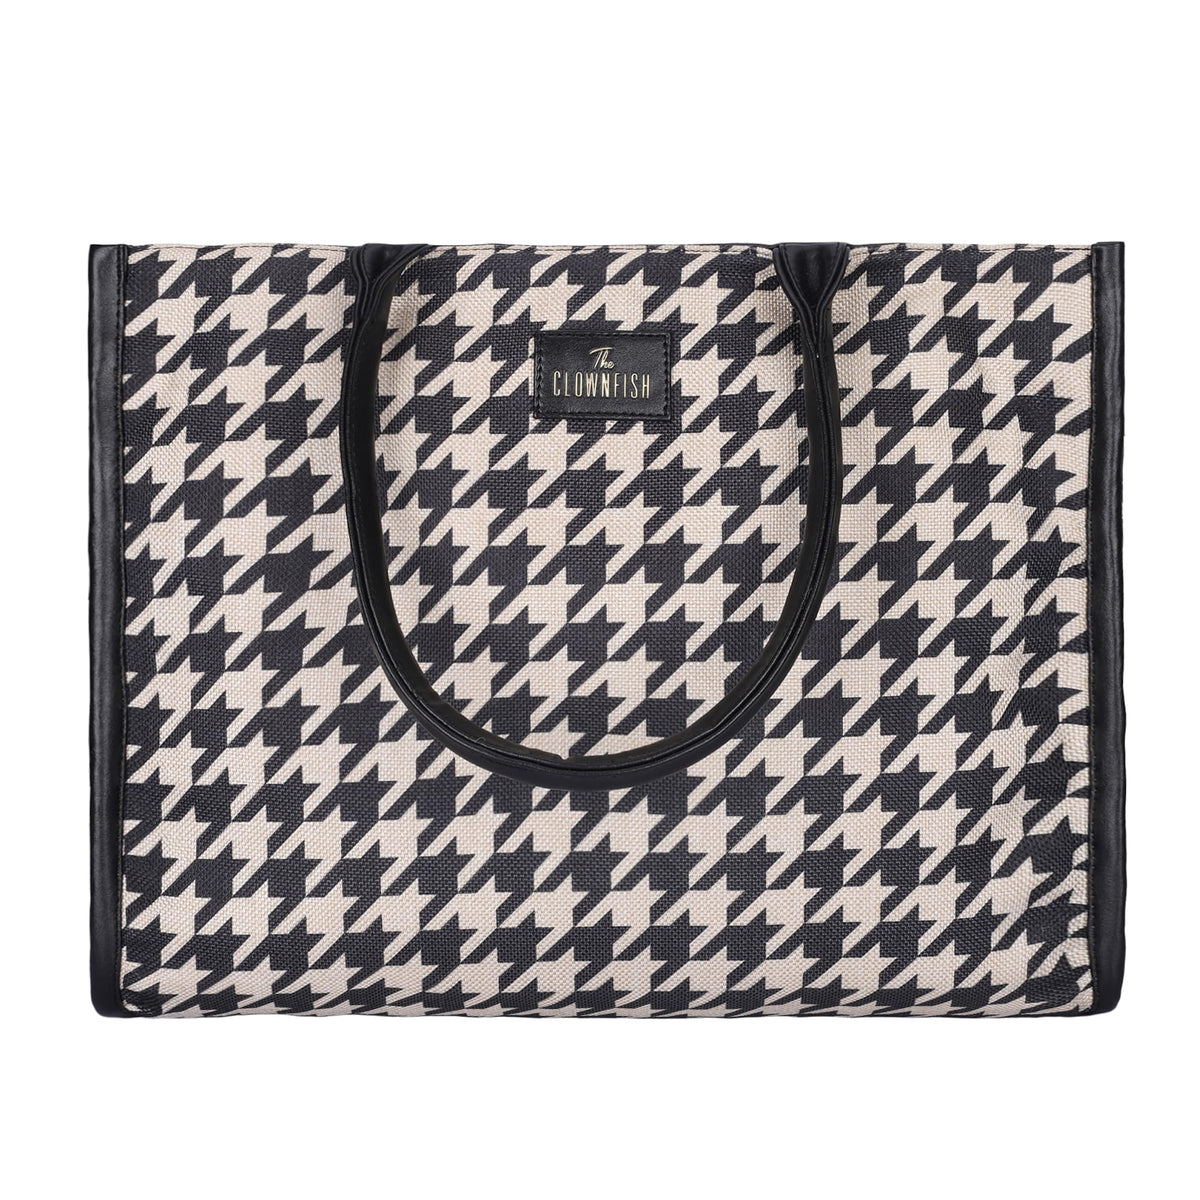 THE CLOWNFISH Opulence Series Multipurpose Handbag For Women Box Bag 14 inch Laptop Bag Tote Printed Handicraft Fabric & Faux Leather Bag (Black-Star Design)